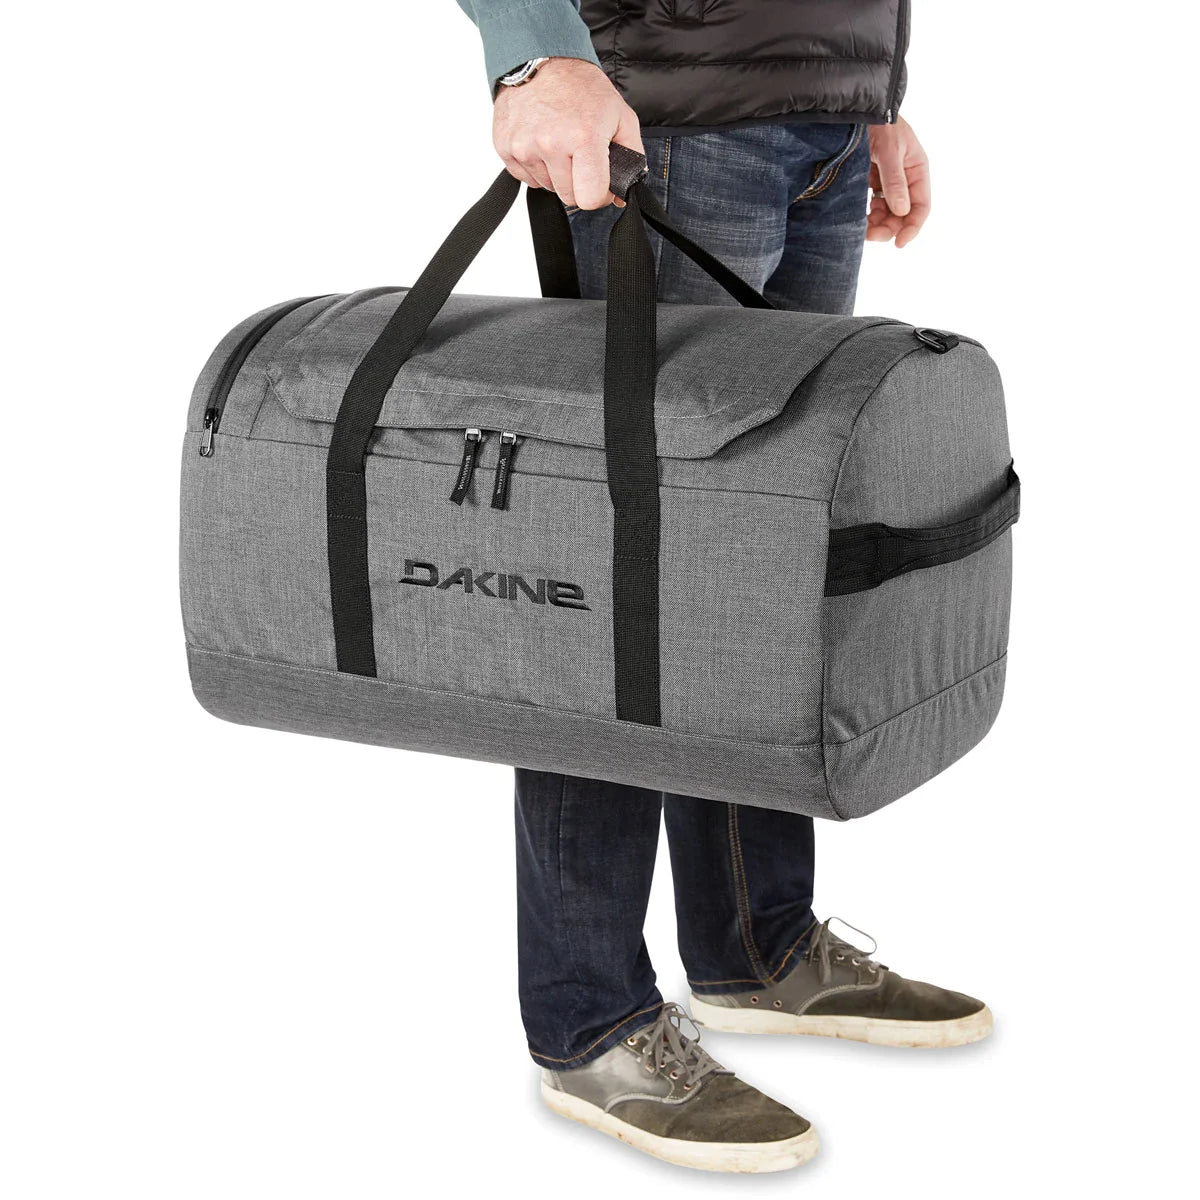 Dakine Packs & Bags EQ Duffle 70L Sporttasche 61 cm - Carbon